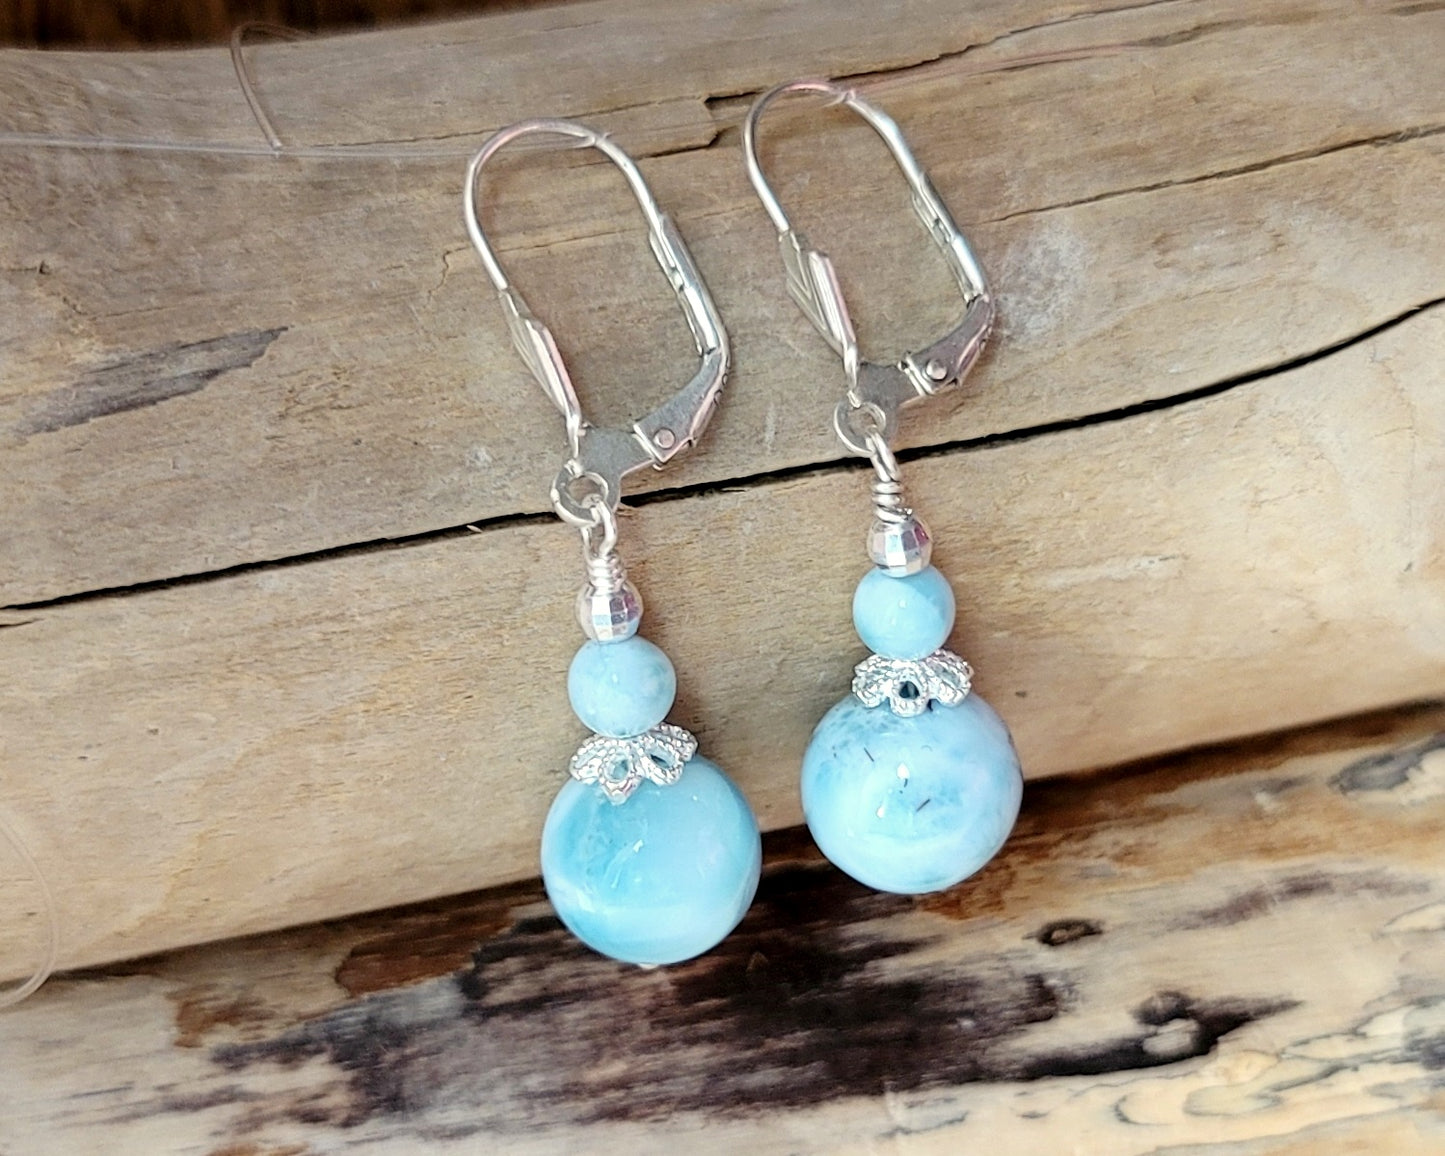 Deluxe Larimar Beach Paradise Earrings, Long Dangle blue Gemstone Earrings on lever back earring hooks, displayed on beach wood. 